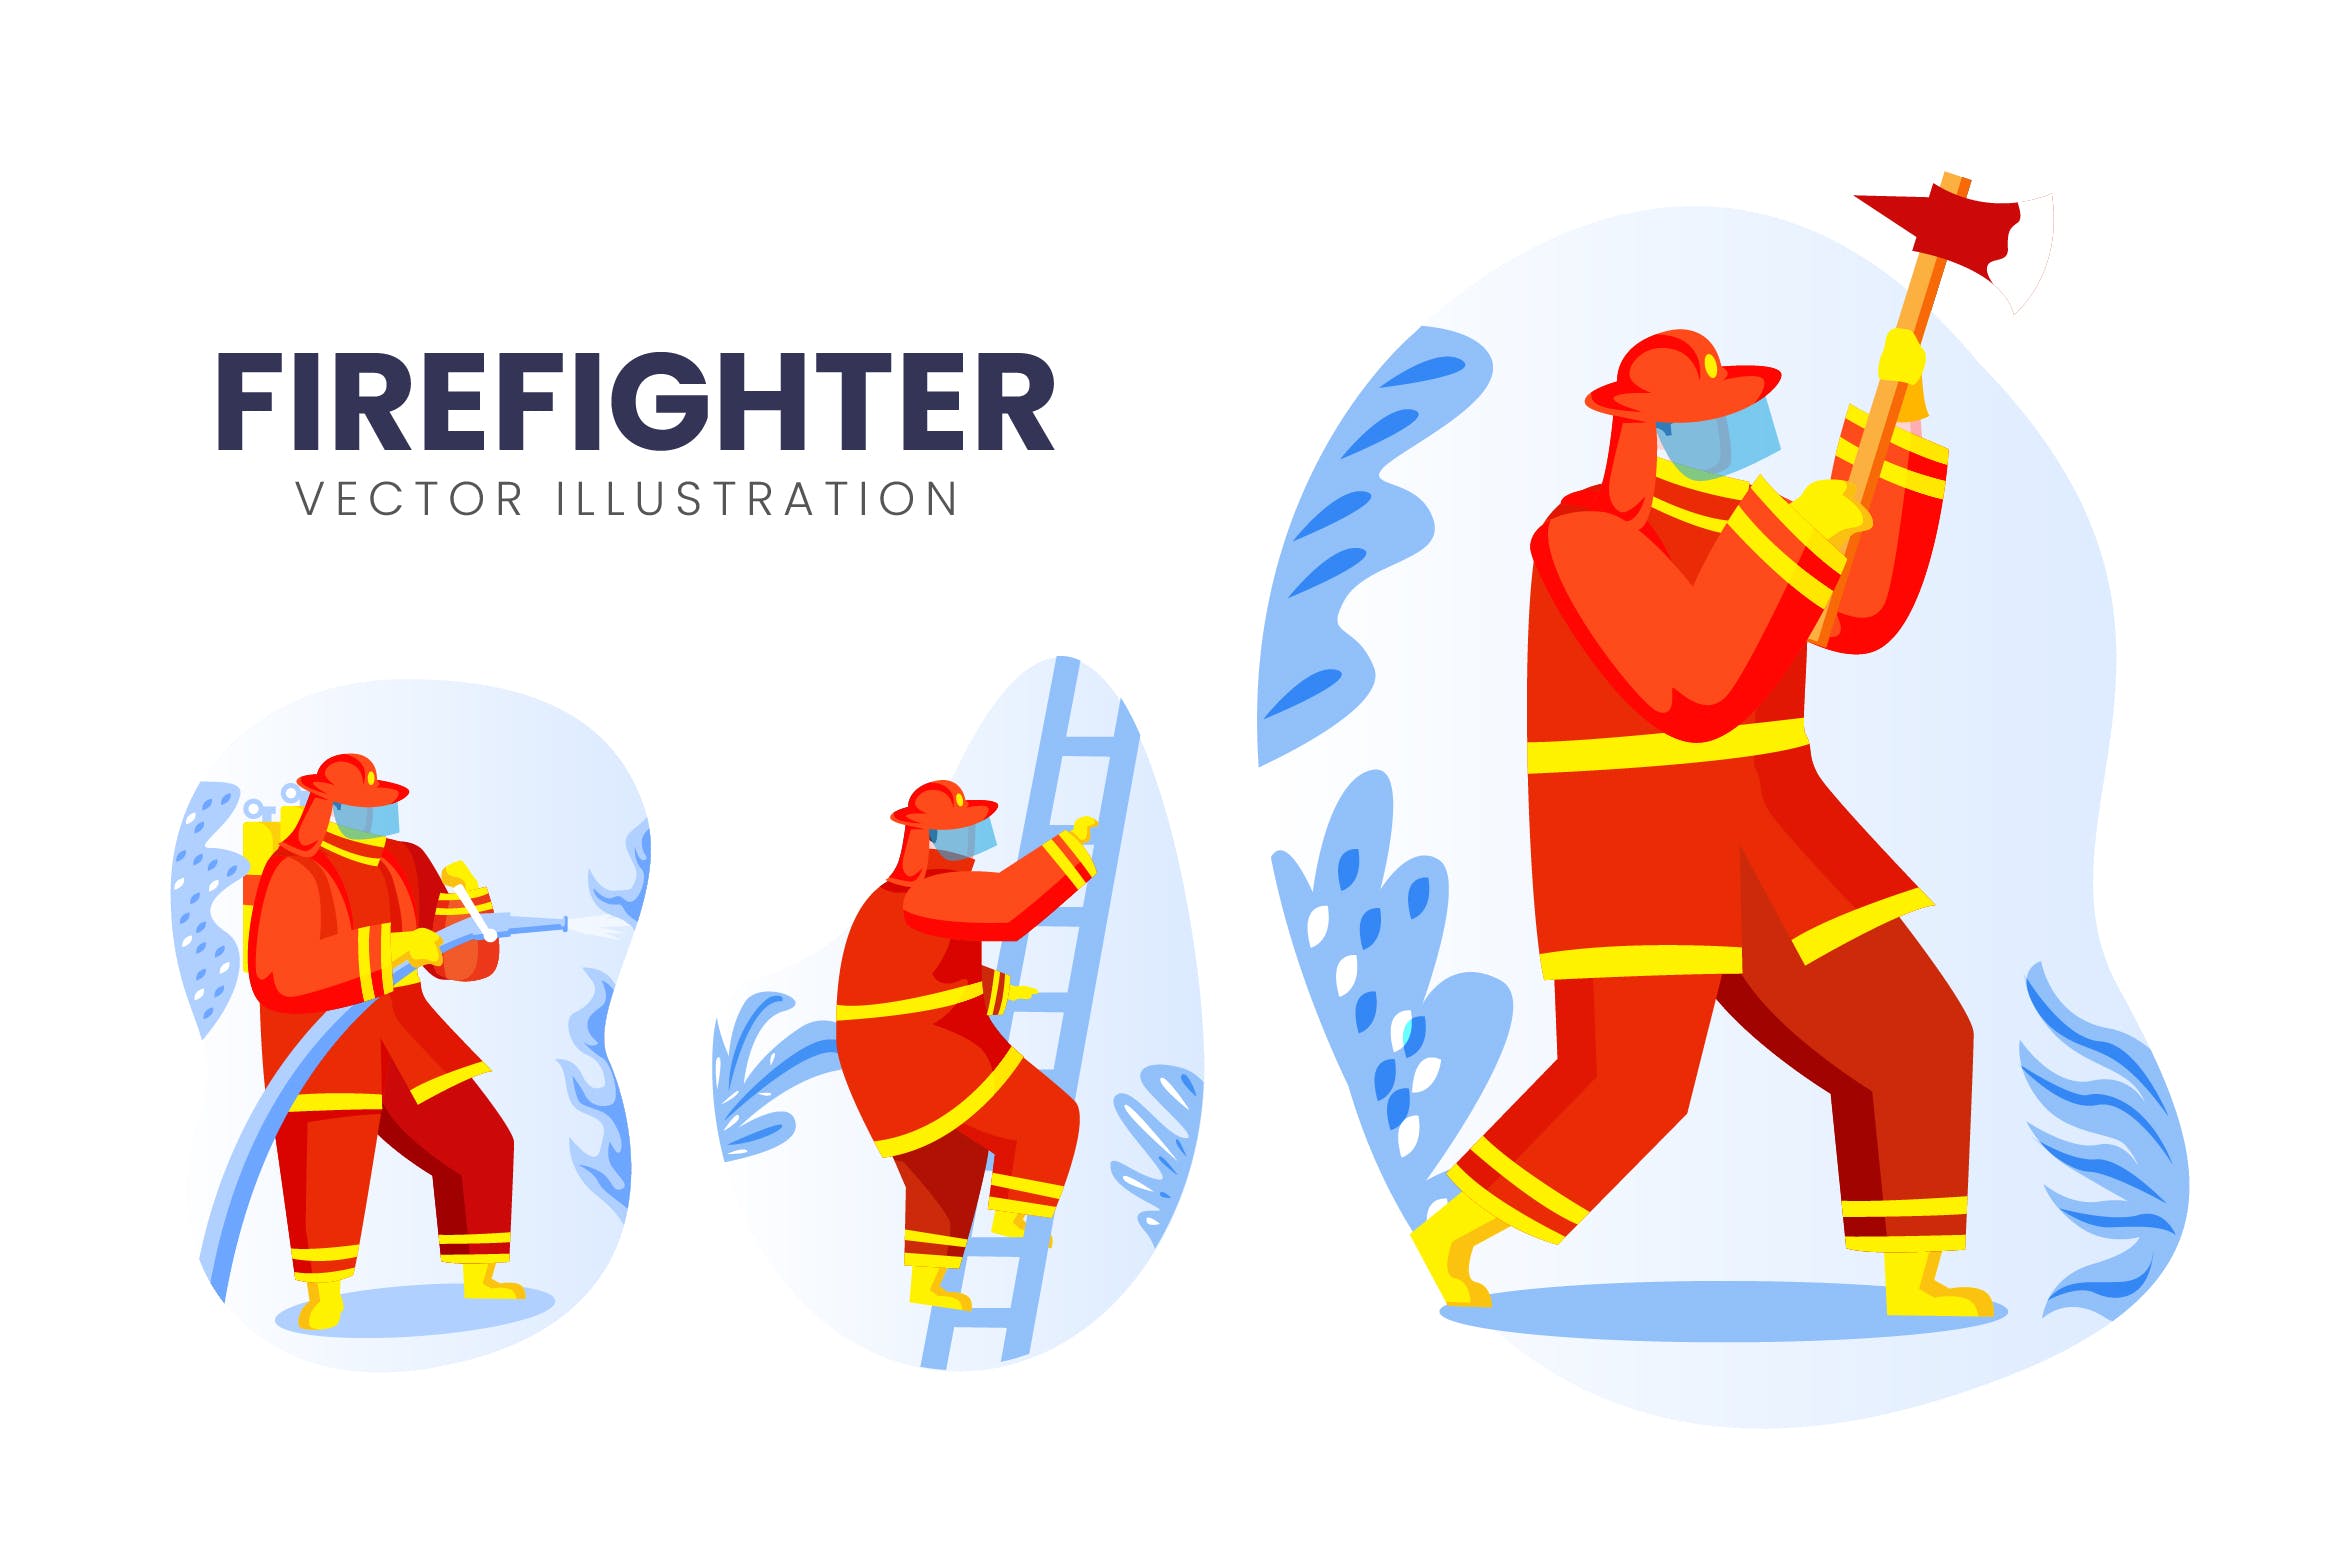 消防员卡通人物矢量插画素材库精选素材 Firefighter Vector Character Set Illustration插图